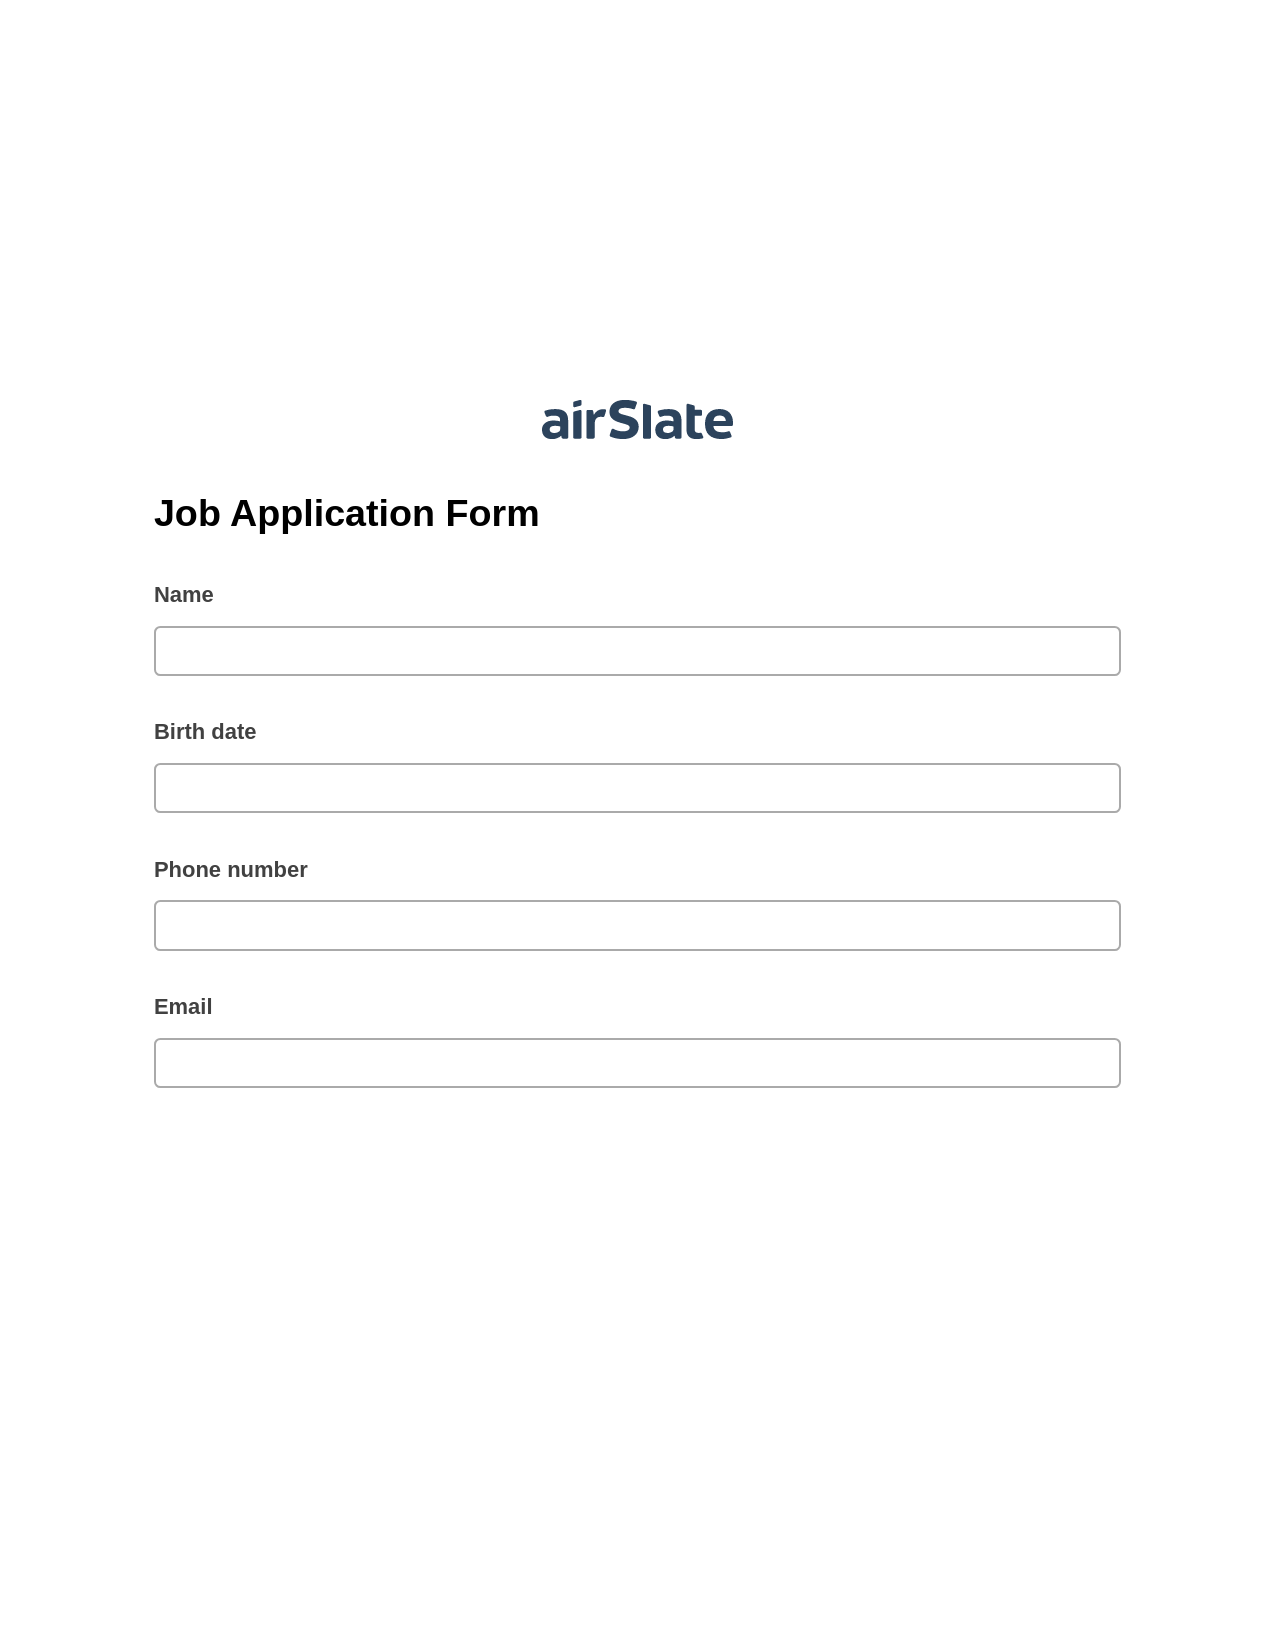 Multirole Job Application Form Pre-fill from MySQL Dropdown Options Bot, Webhook Bot, Export to MySQL Bot